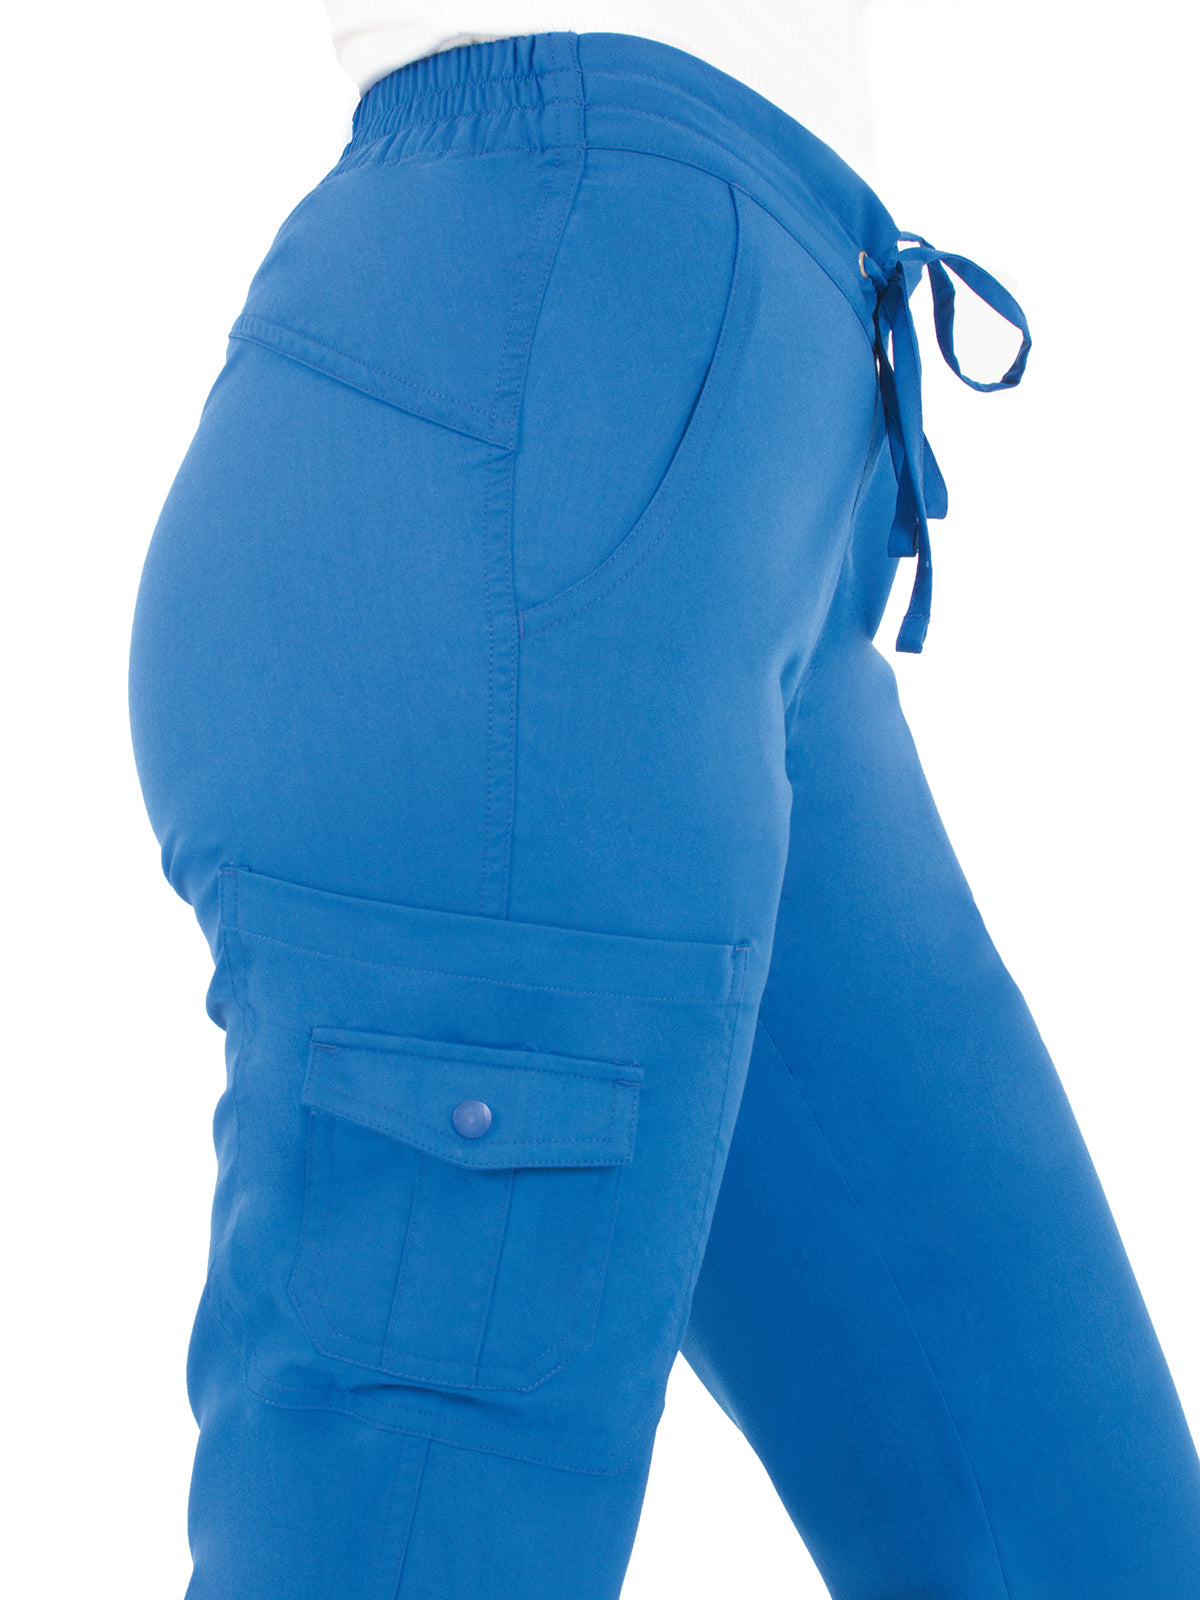 Women's Cargo Pant - 1427 - Royal Blue